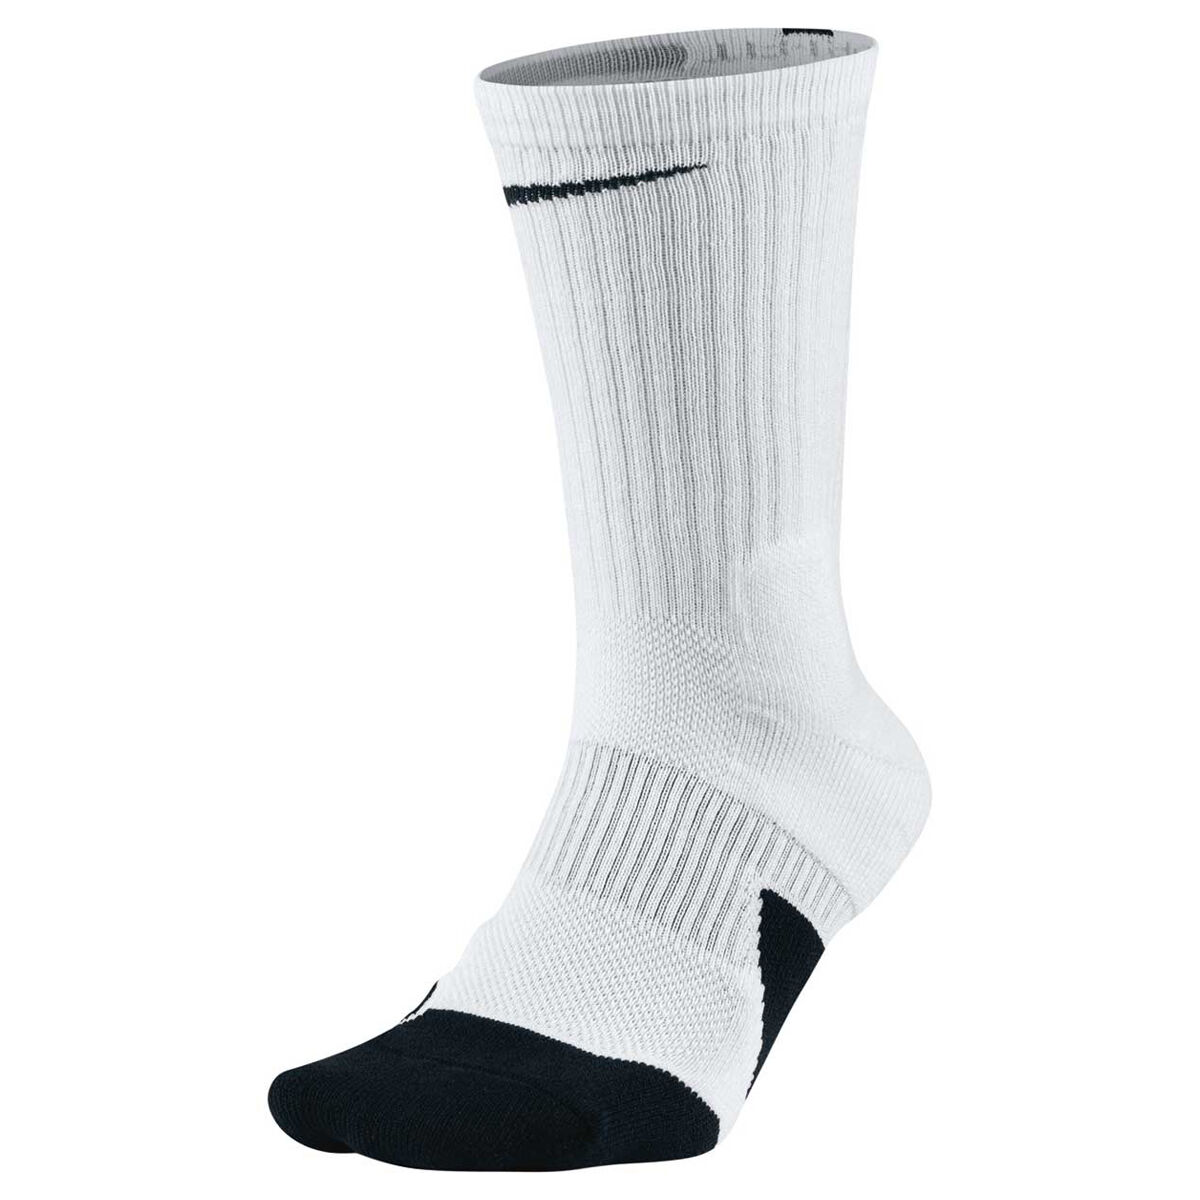 where to buy nike elite socks